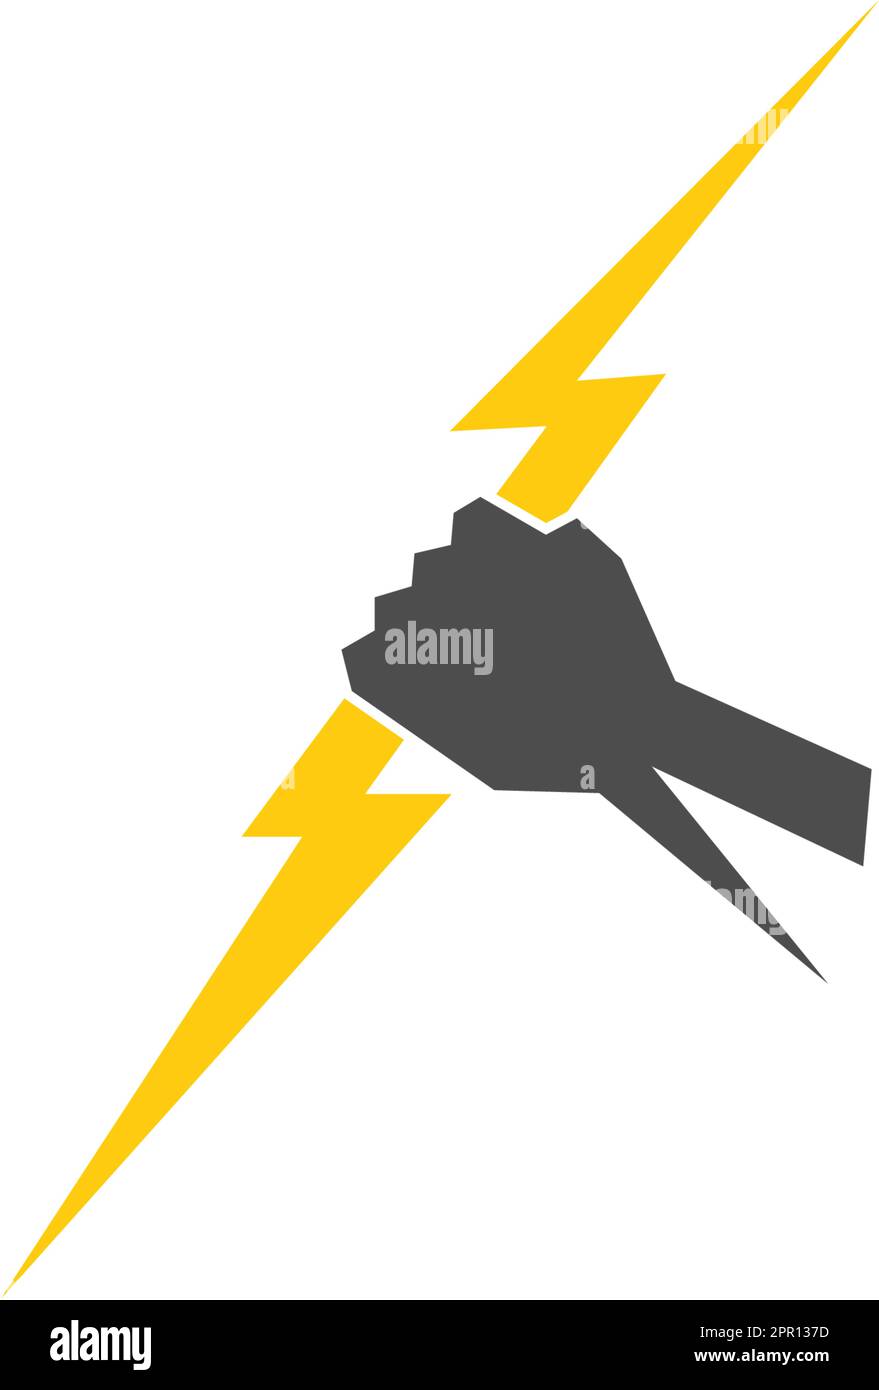 Lightning logo icon design illustration Stock Vector